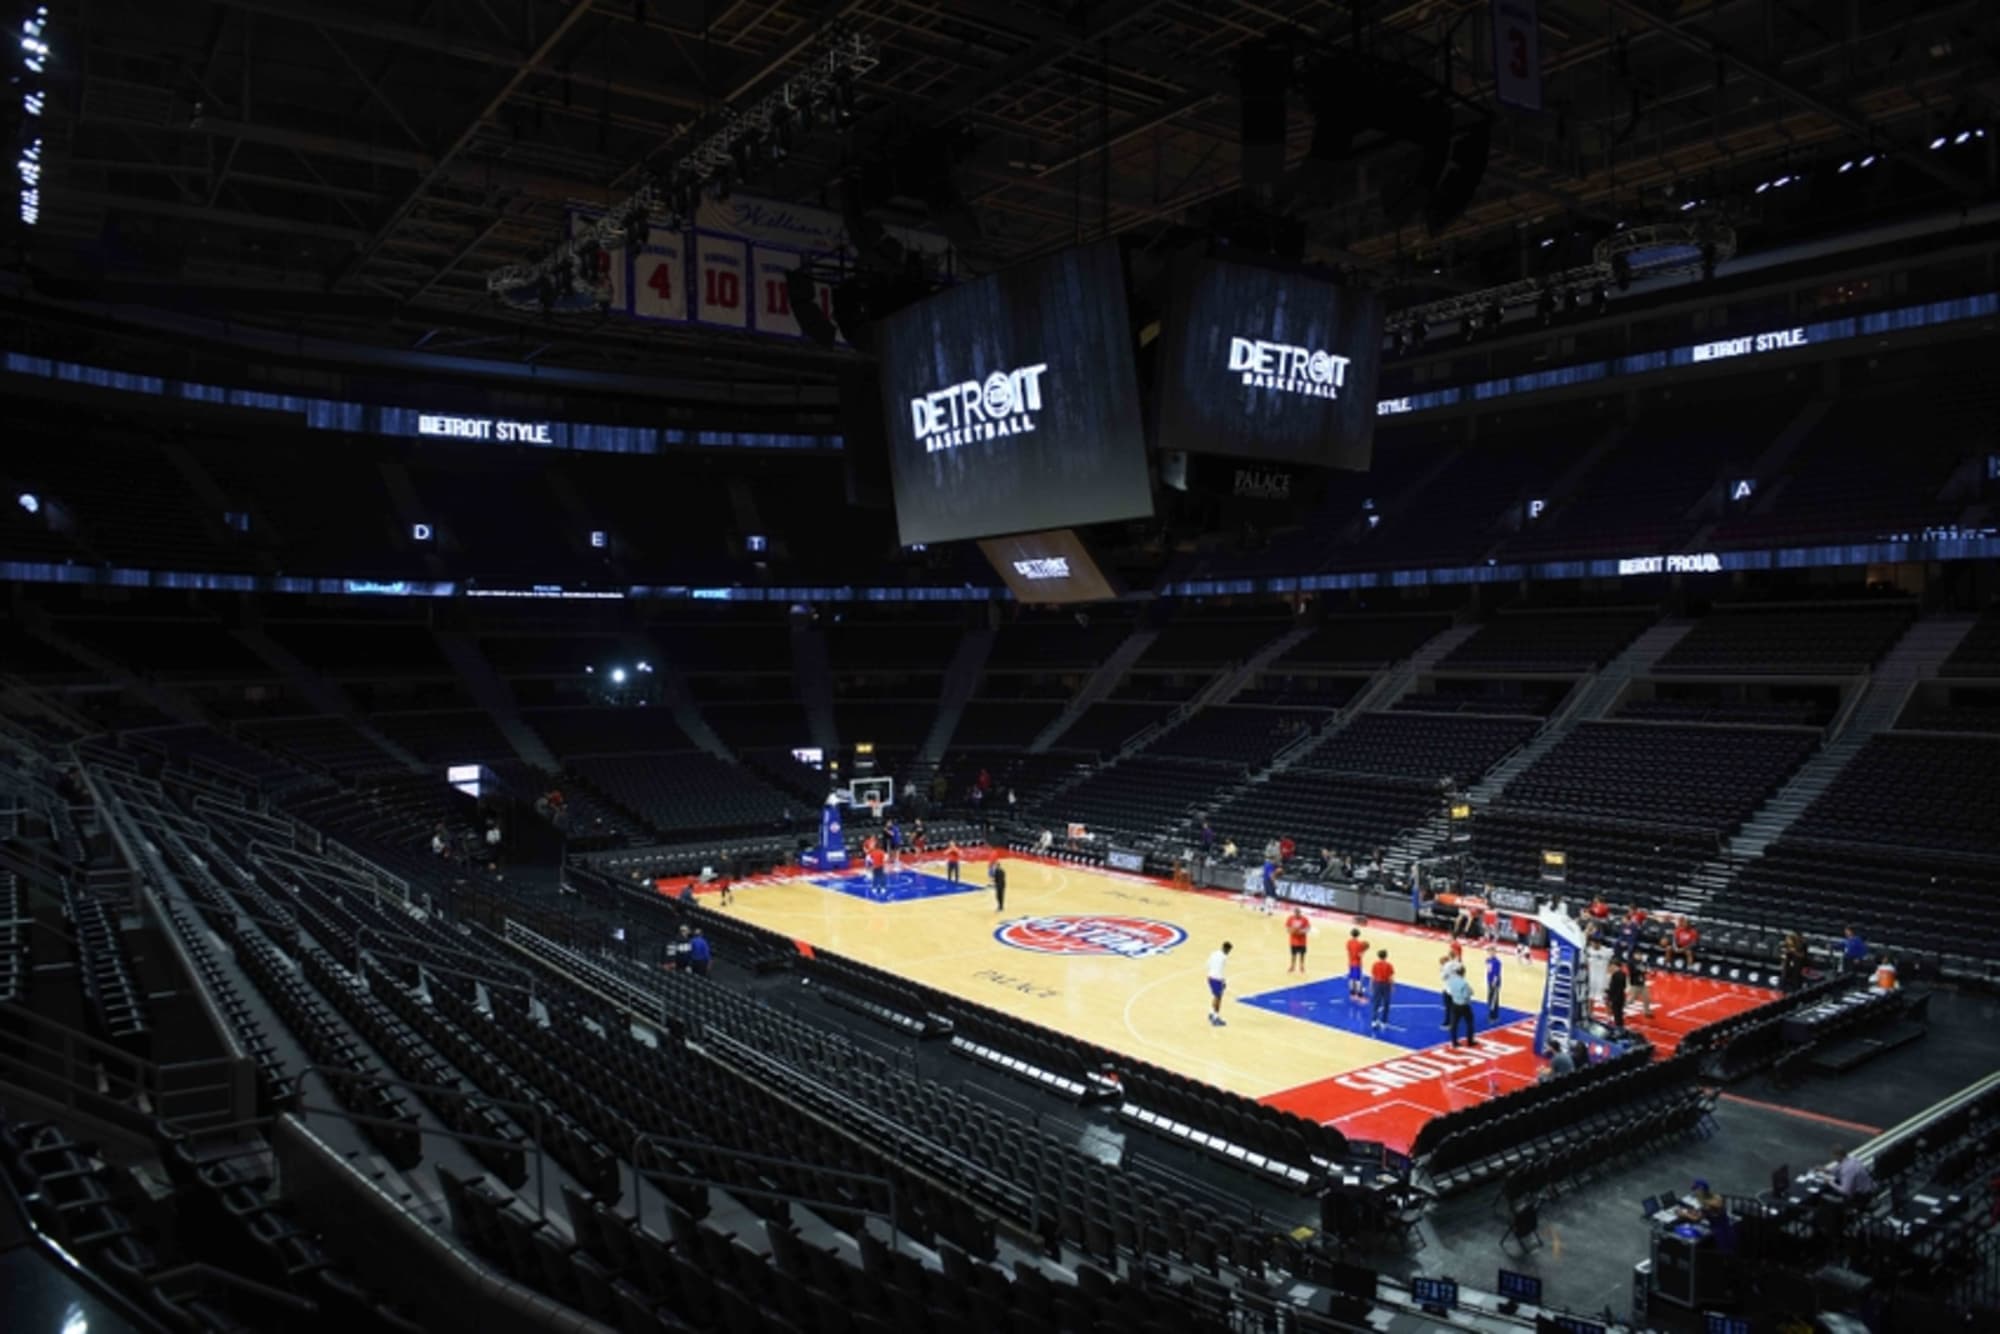 Arena tops. Detroit Pistons Arena. Топ Арена. NBA Arena. 2d фон Арена.